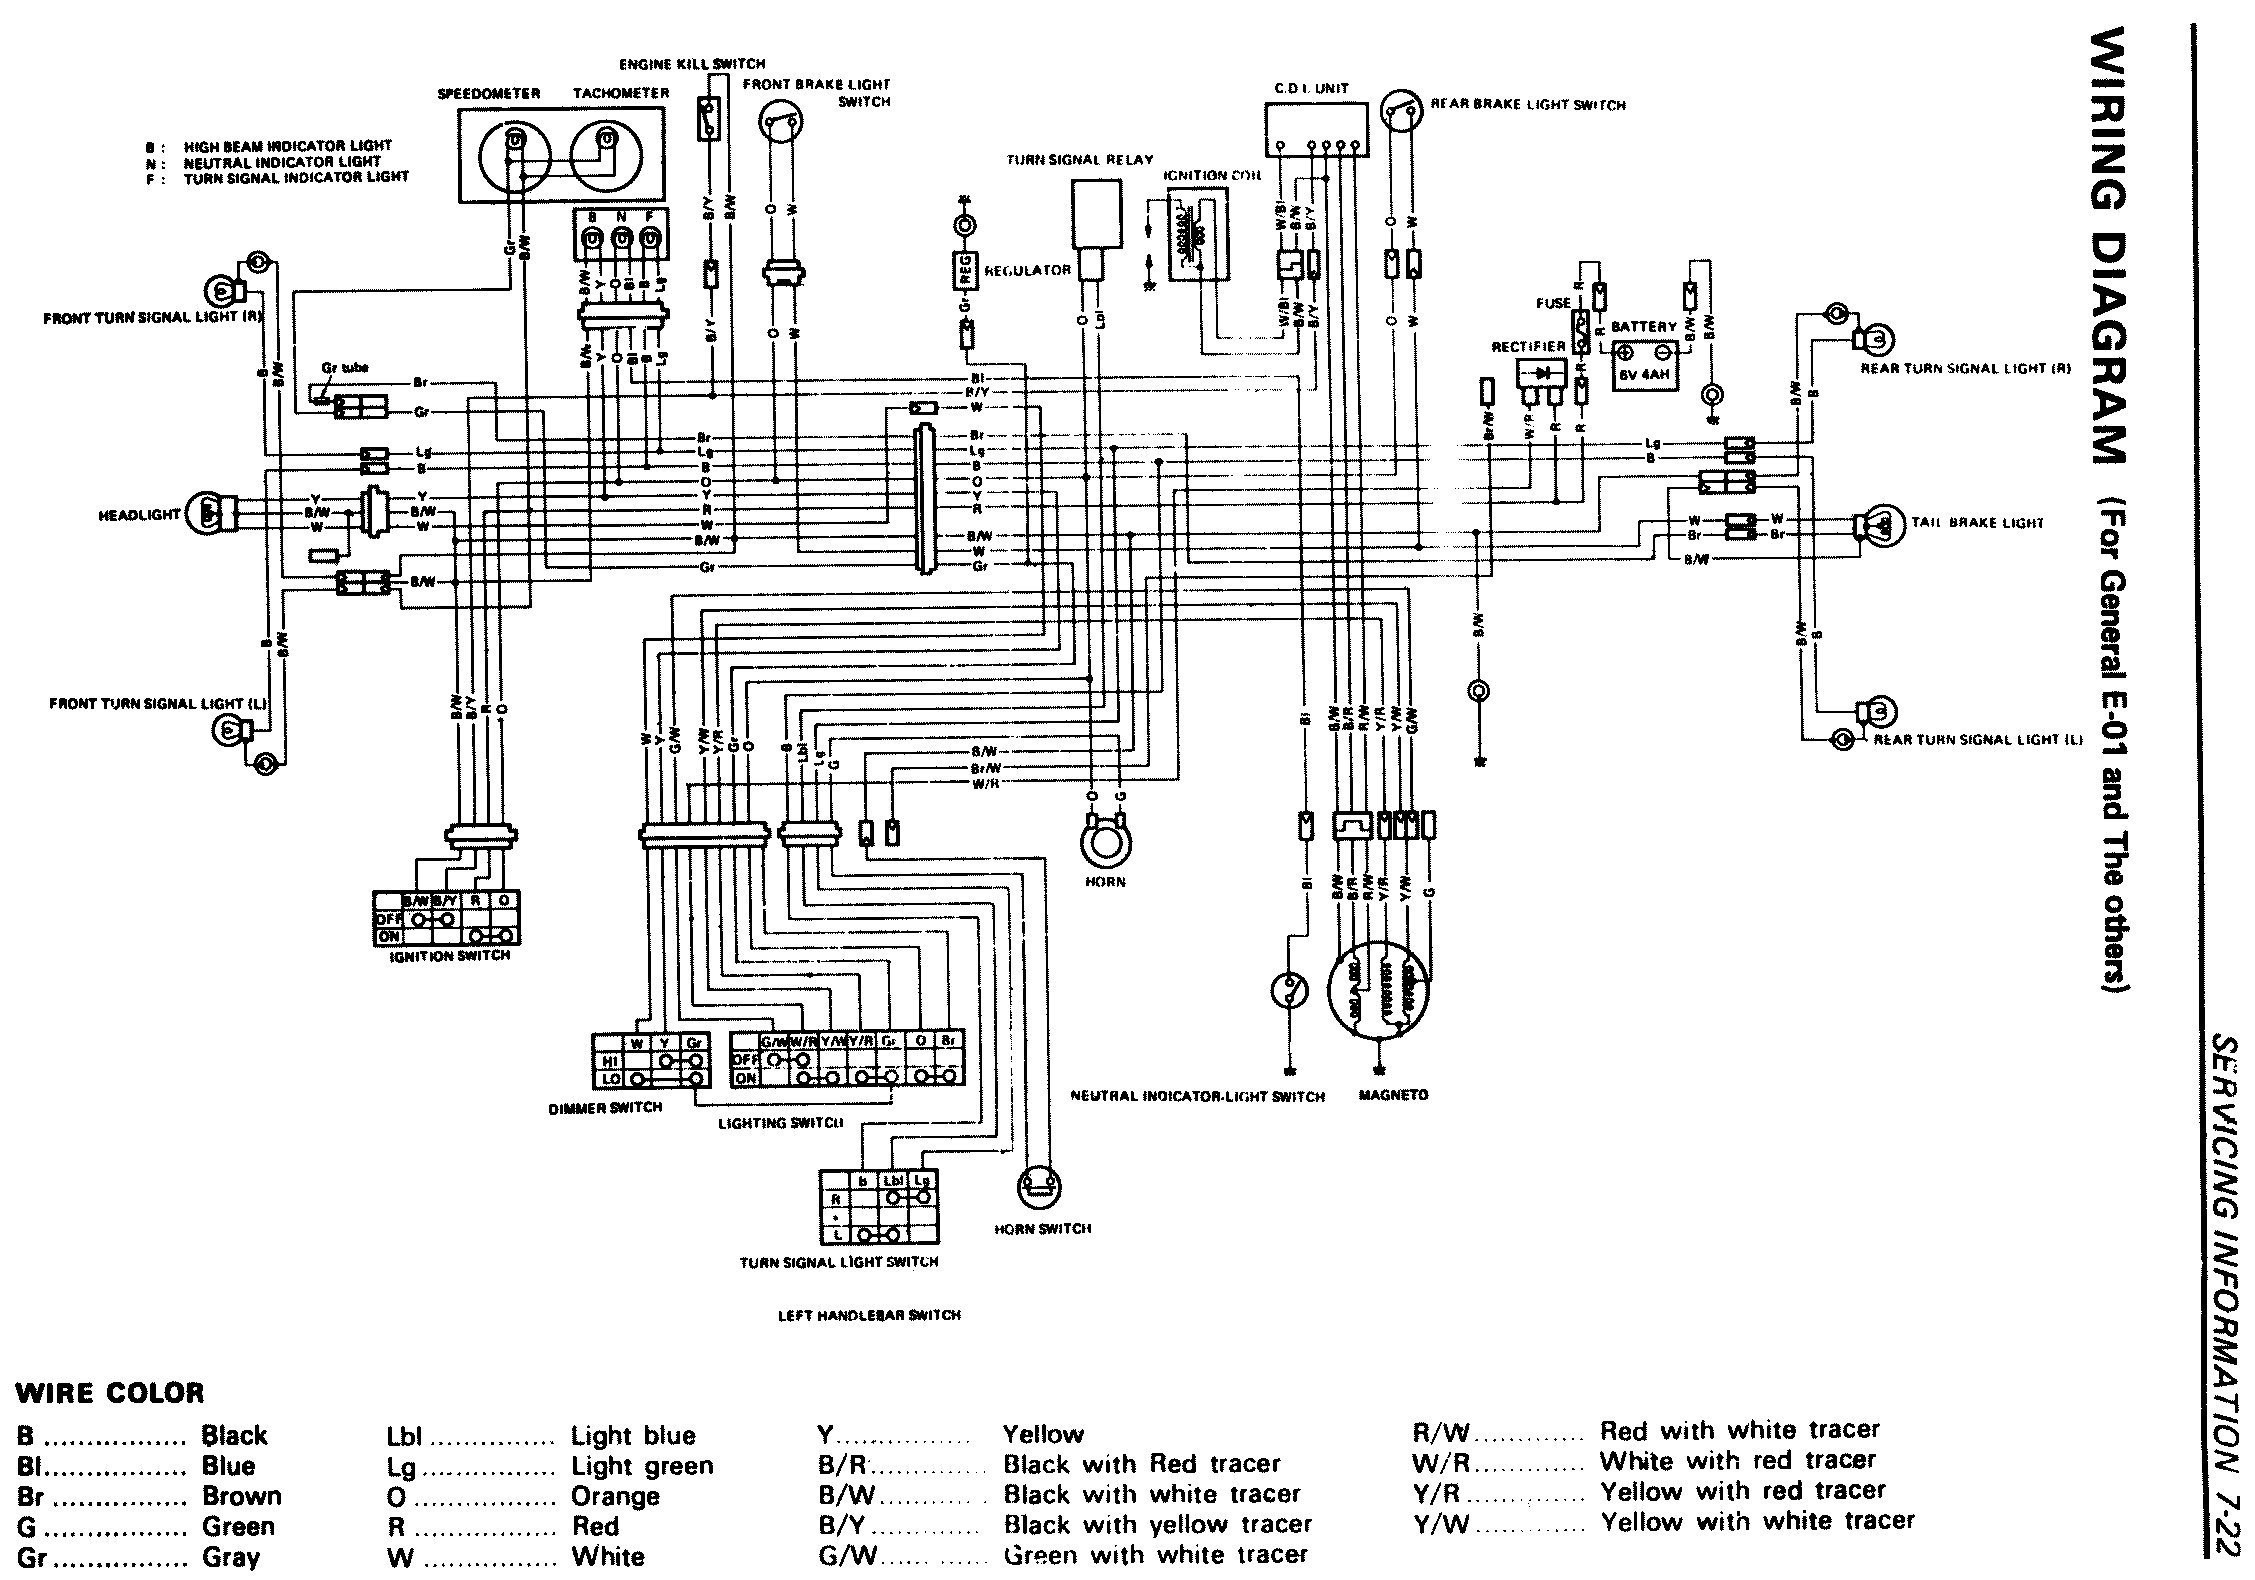 12v hydraulic pump wiring diagram Collection 1999 Audi A4 Quattro Wiring Diagram Save Pin Wiring